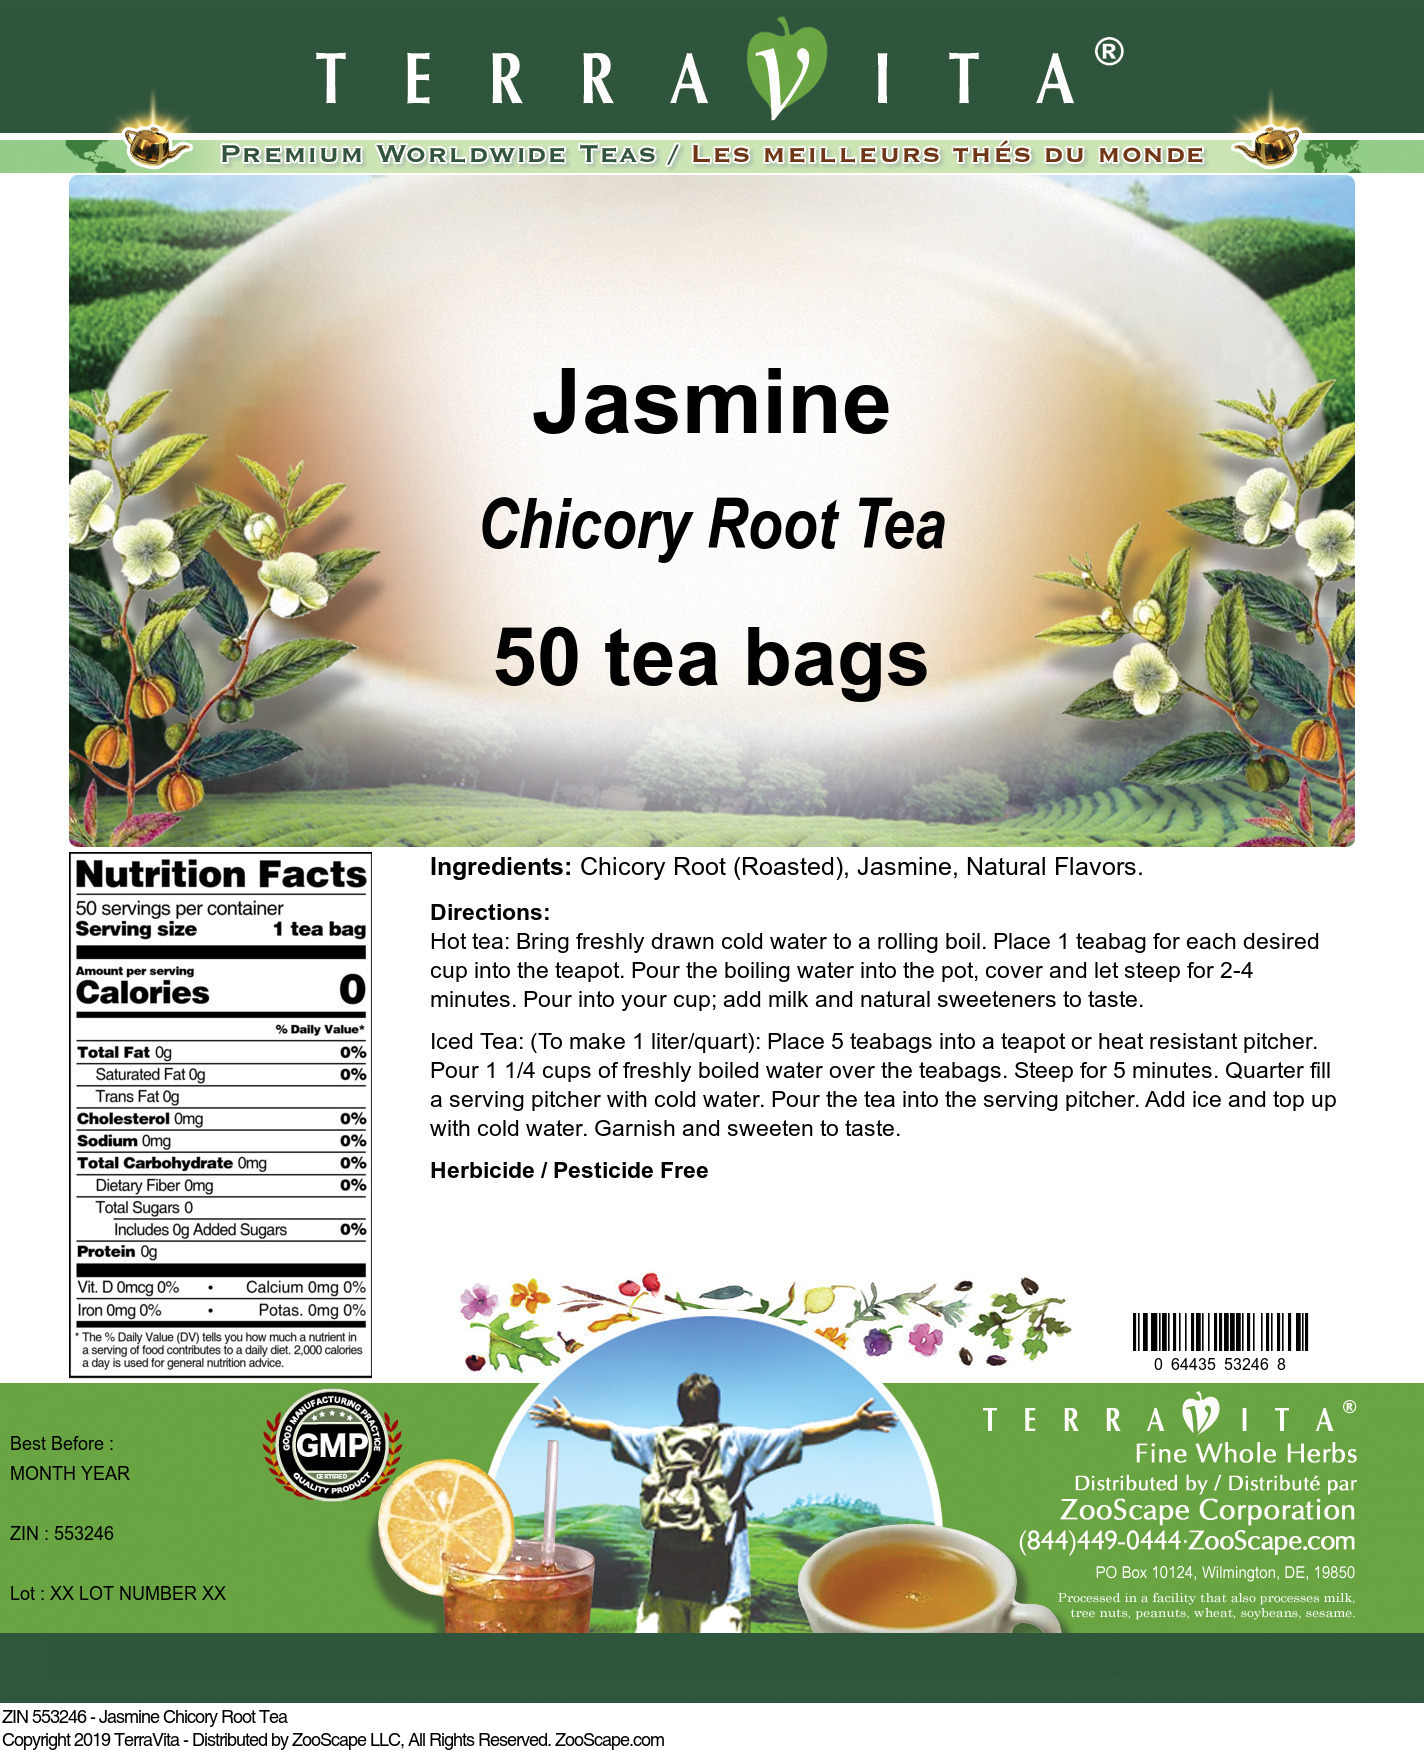 Jasmine Chicory Root Tea - Label